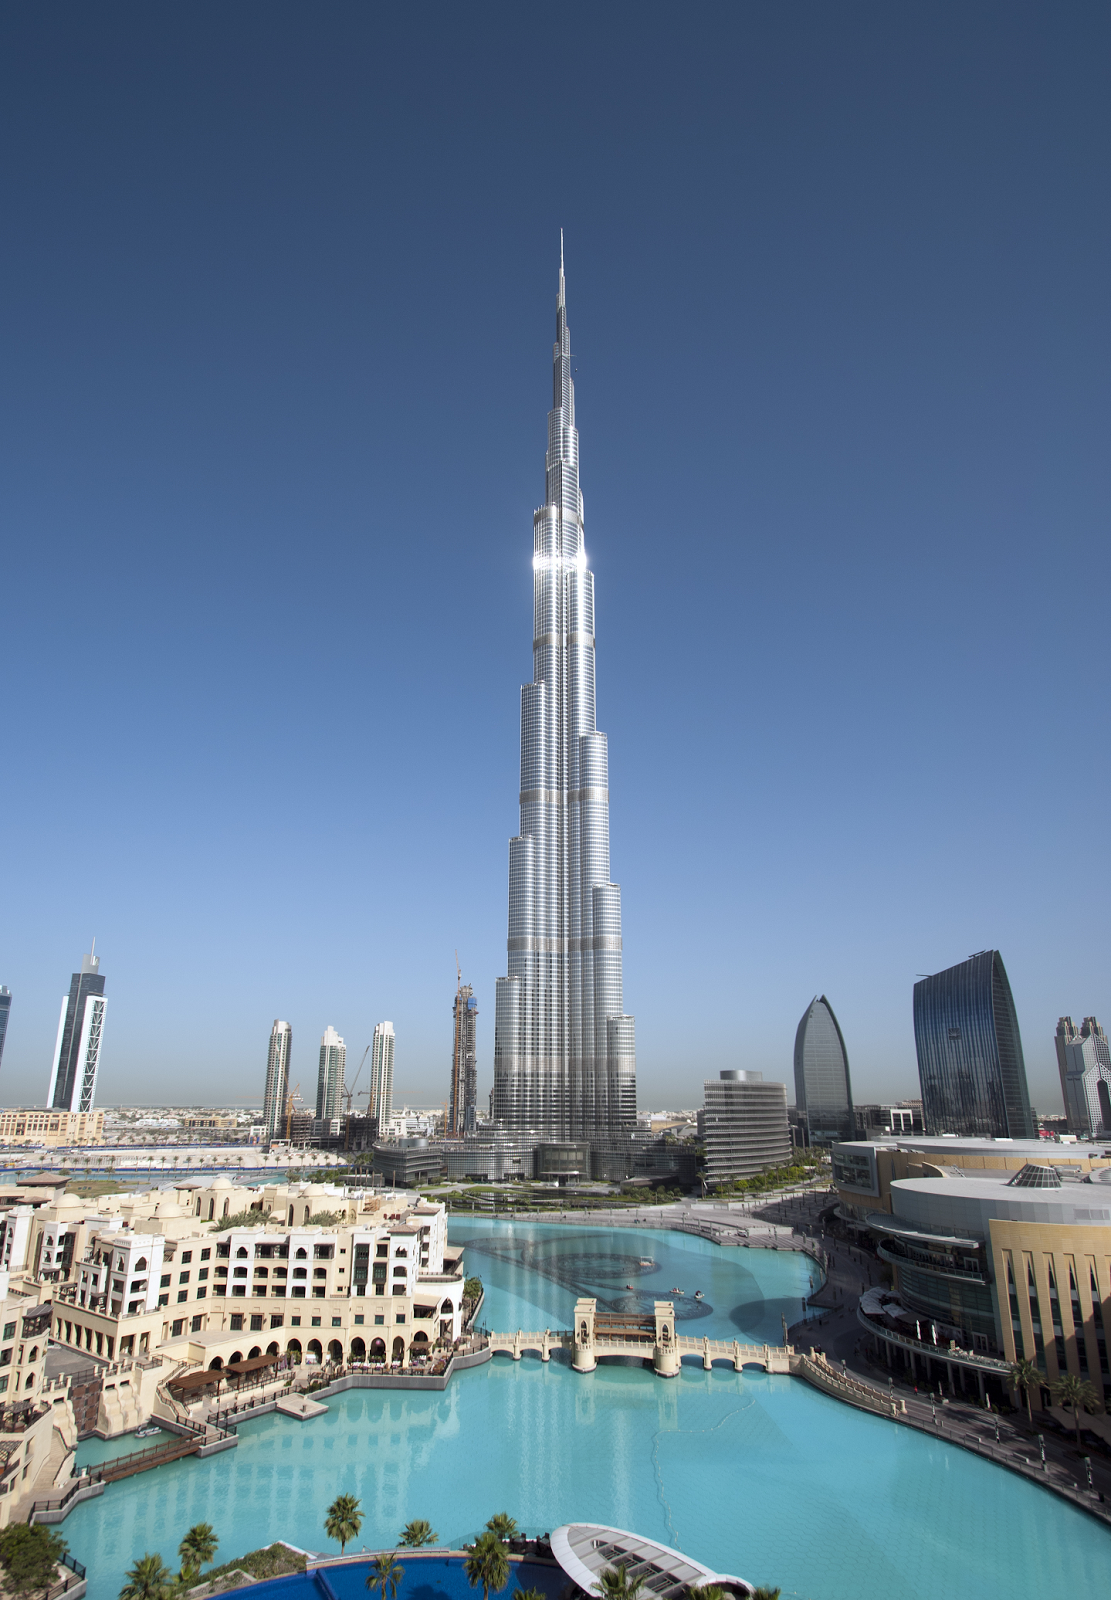 Burj-Khalifa, Dubai (Tallest Building In The World) [16 Pic] ~ Awesome